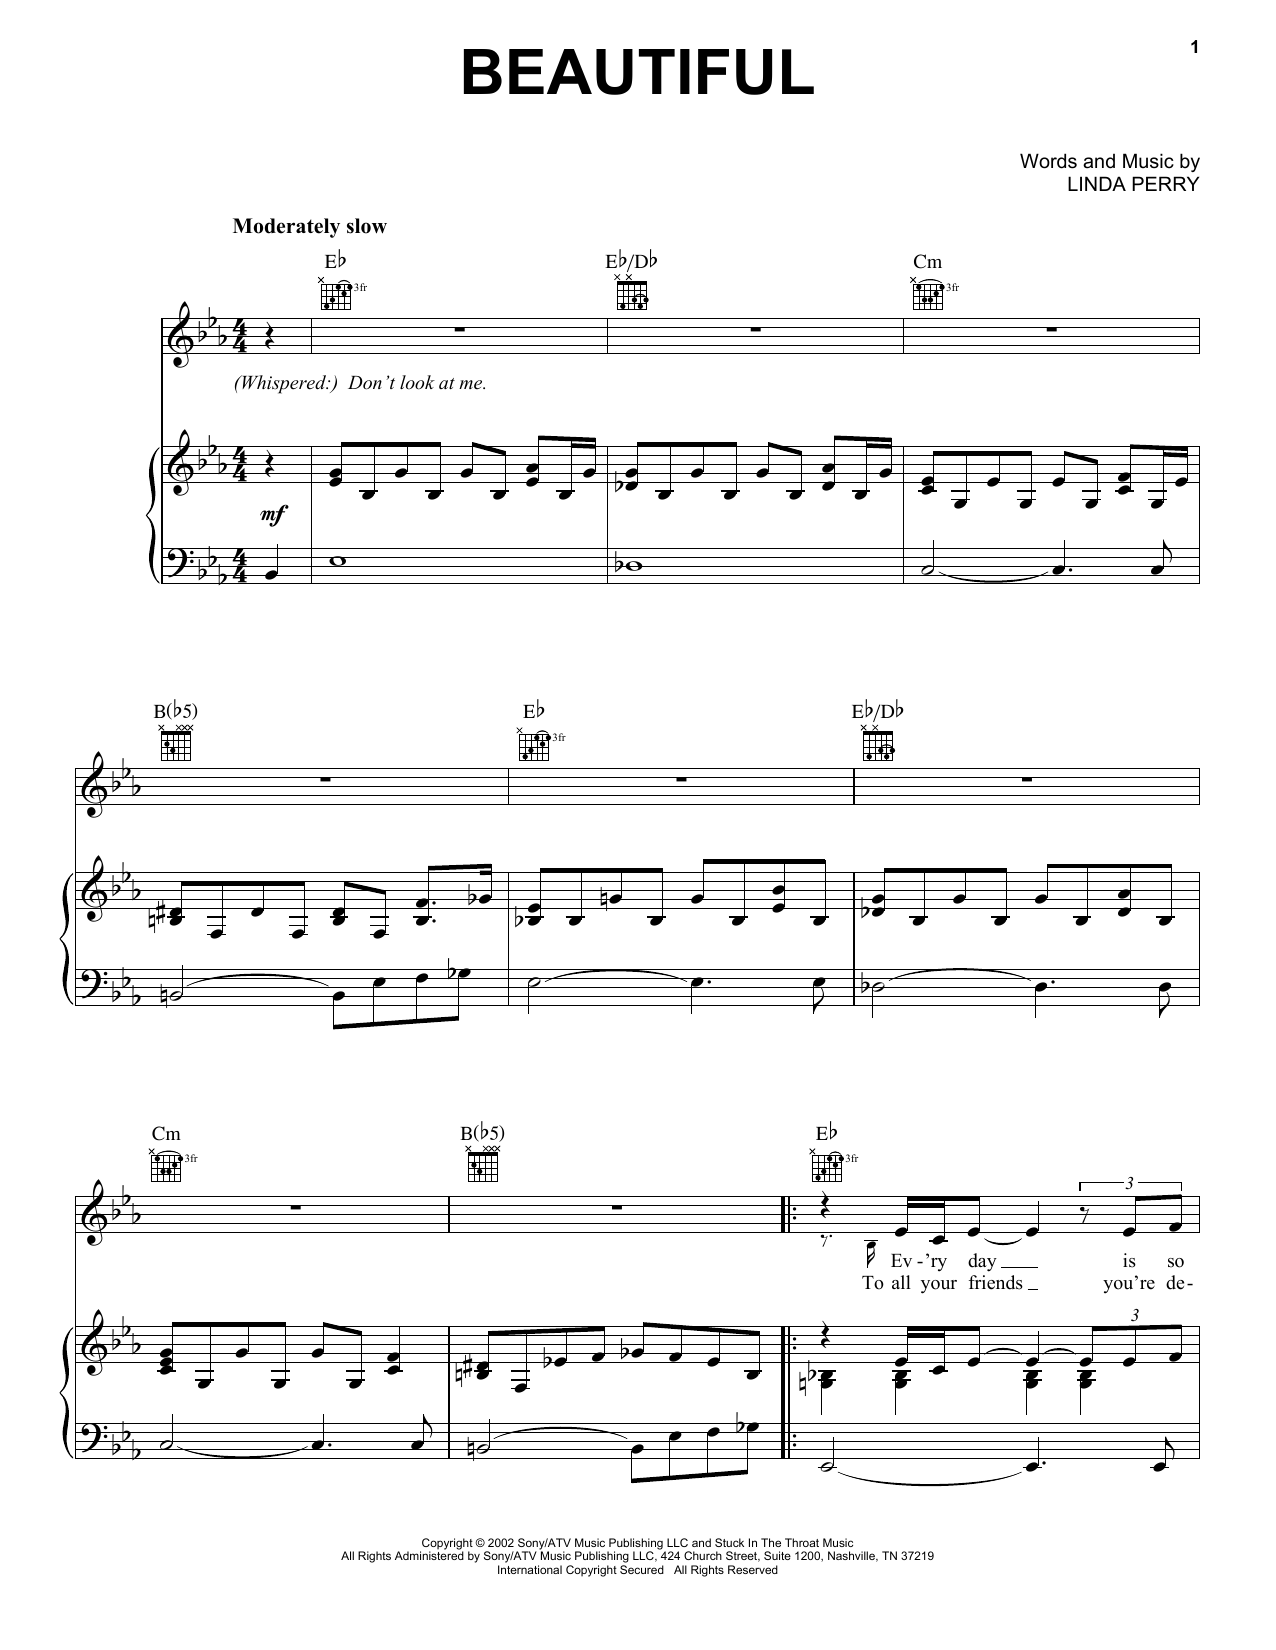 Christina Aguilera Beautiful Sheet Music Notes & Chords for Violin - Download or Print PDF